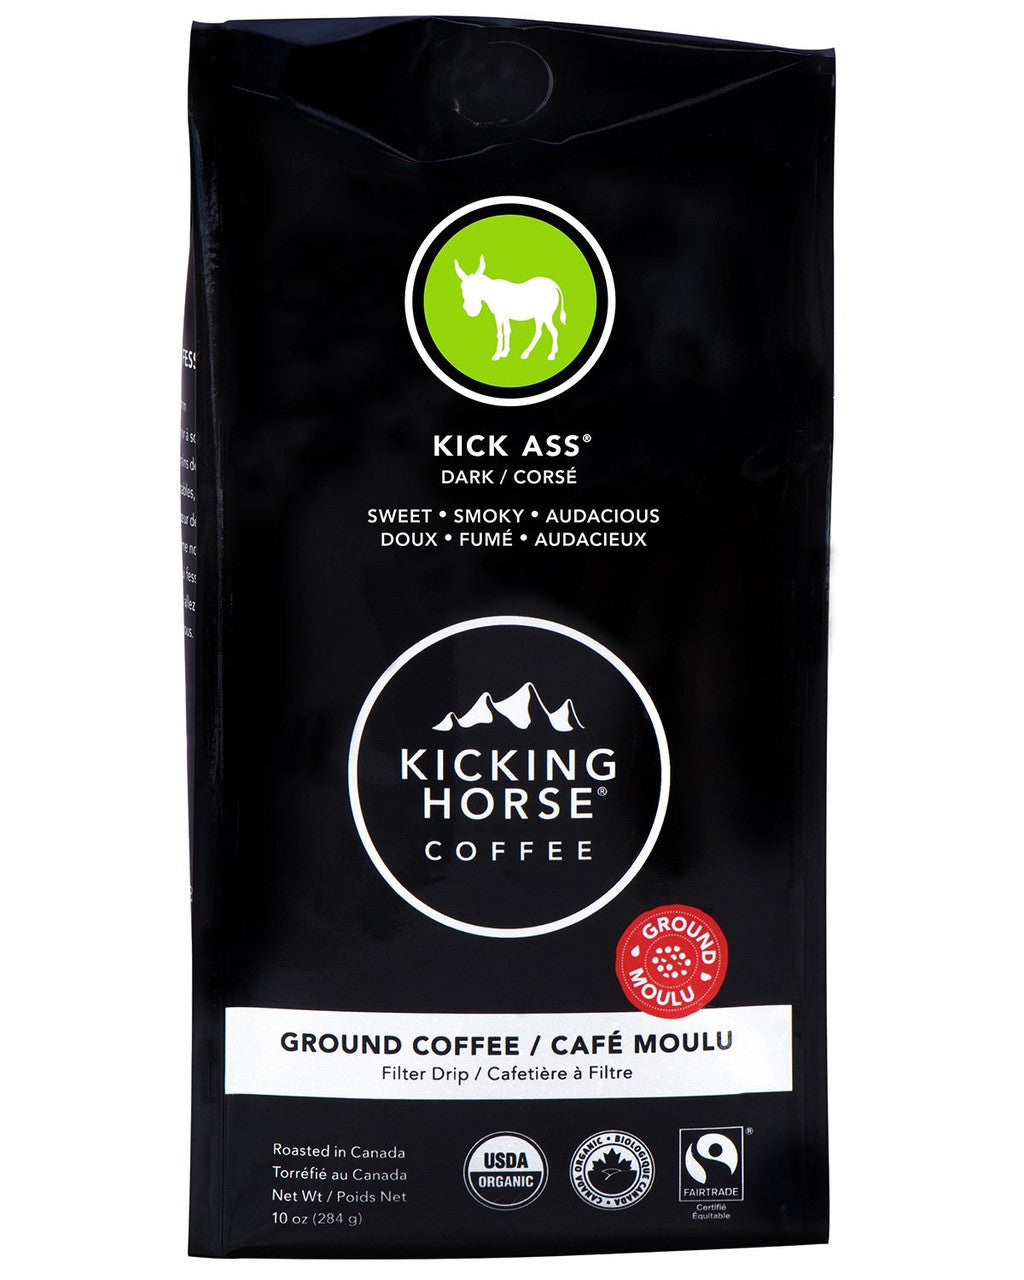 Kicking Horse Ground Coffee Kick Ass Dark Roast 284g/10 oz. {Imported from Canada}